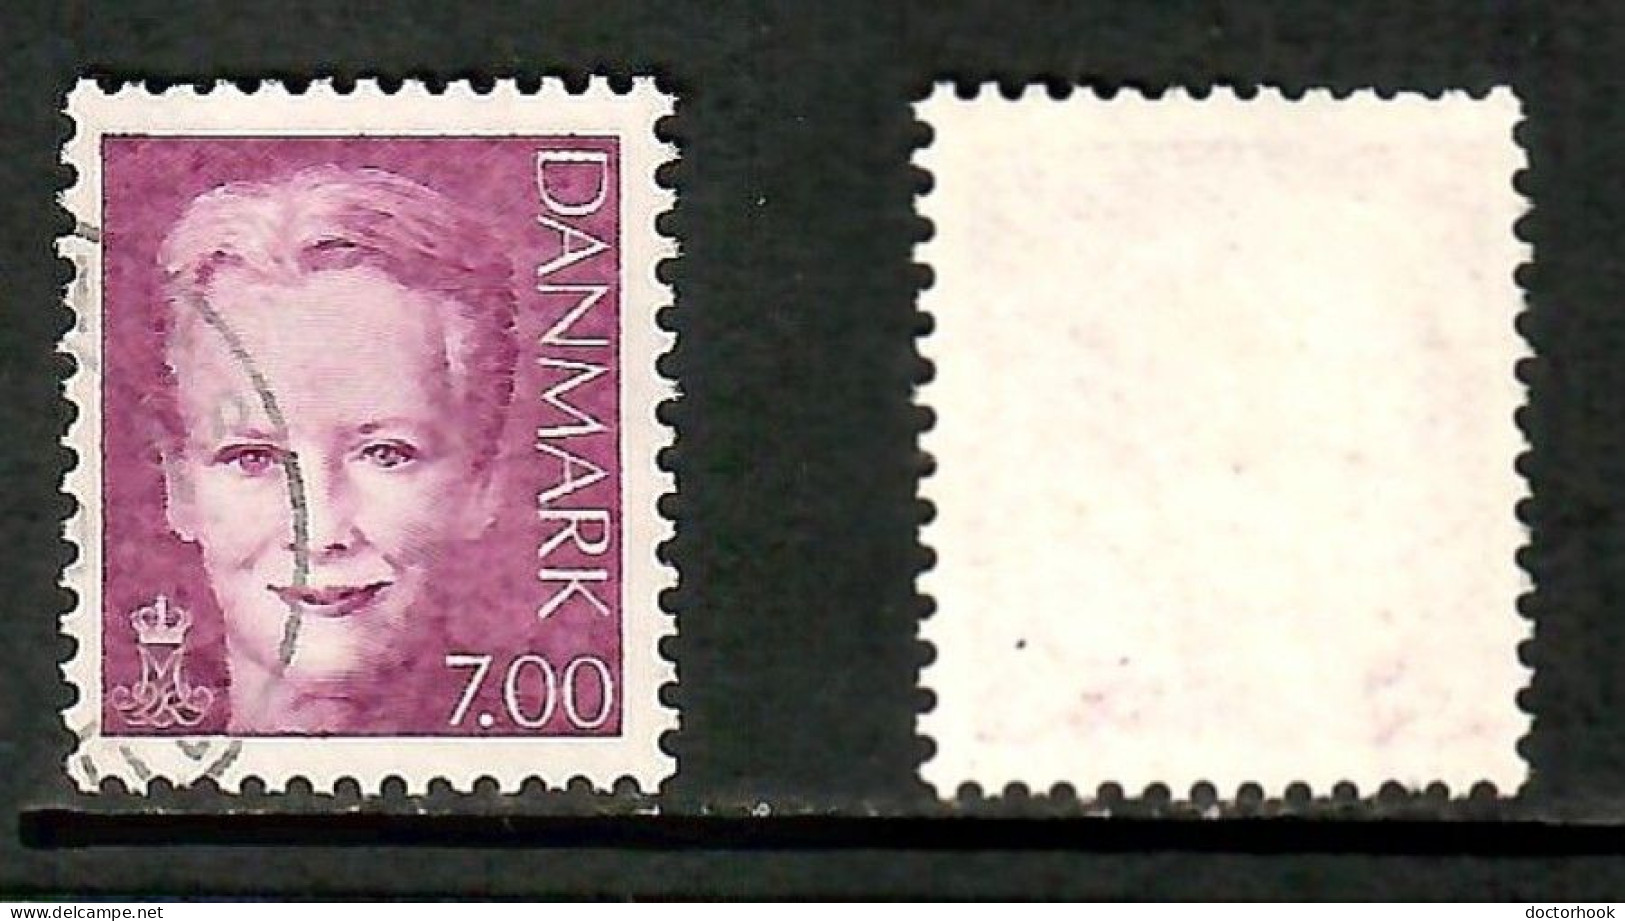 DENMARK   Scott # 1132 USED (CONDITION PER SCAN) (Stamp Scan # 1024-11) - Usado